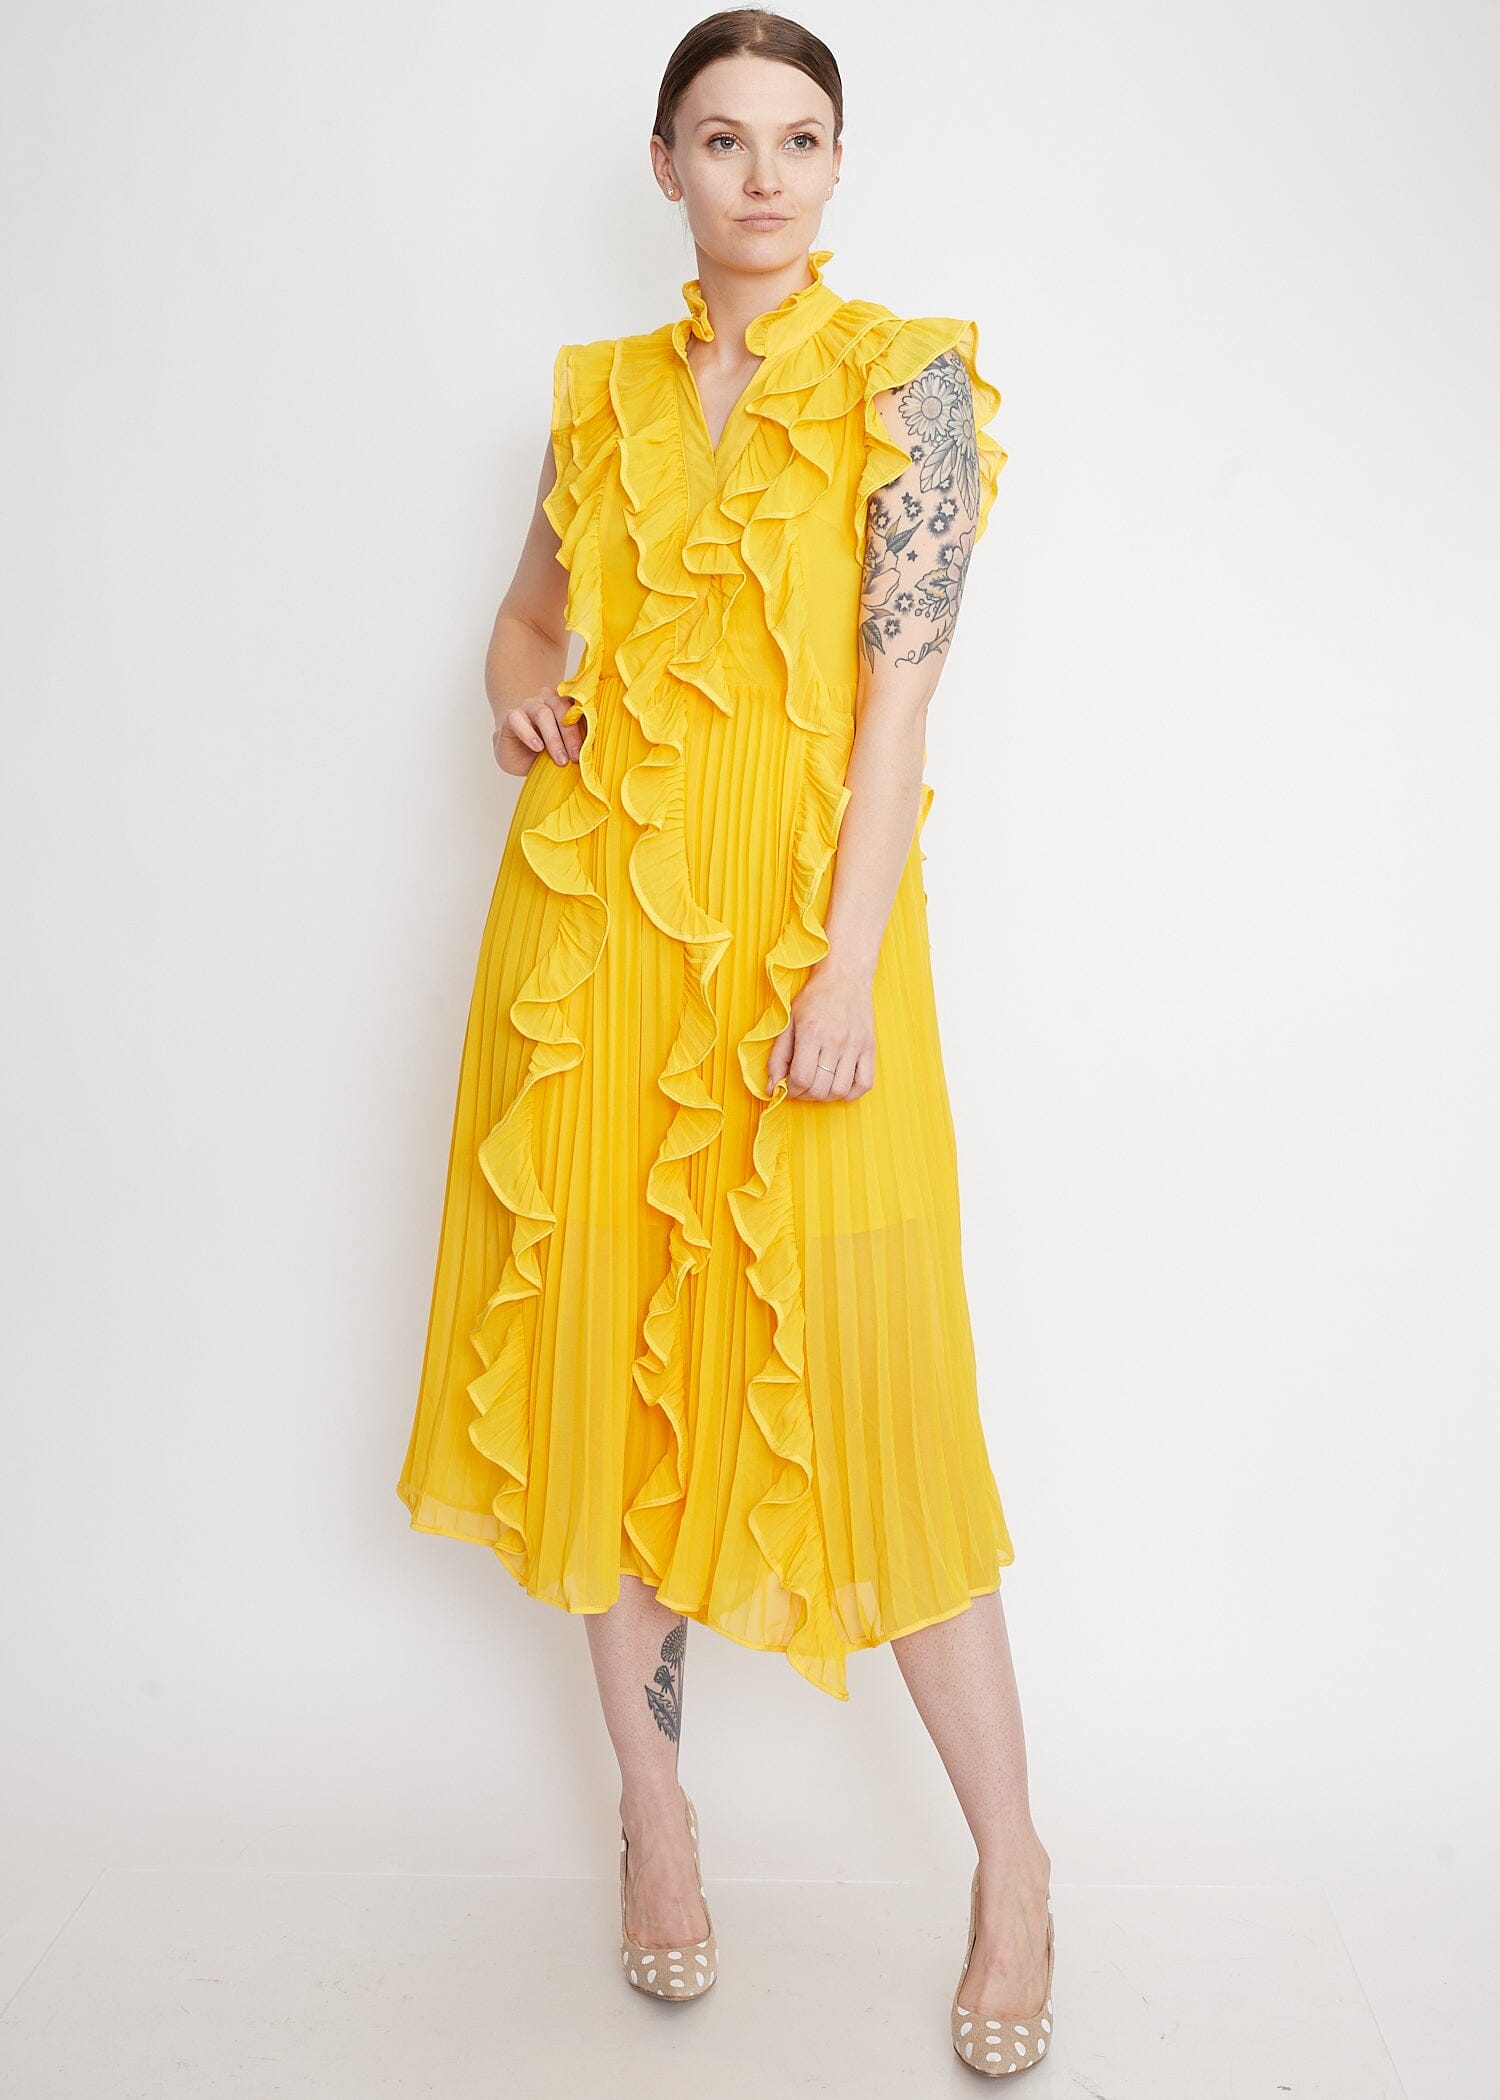 Collared Ruffle Dress Dresses Kate Hewko 